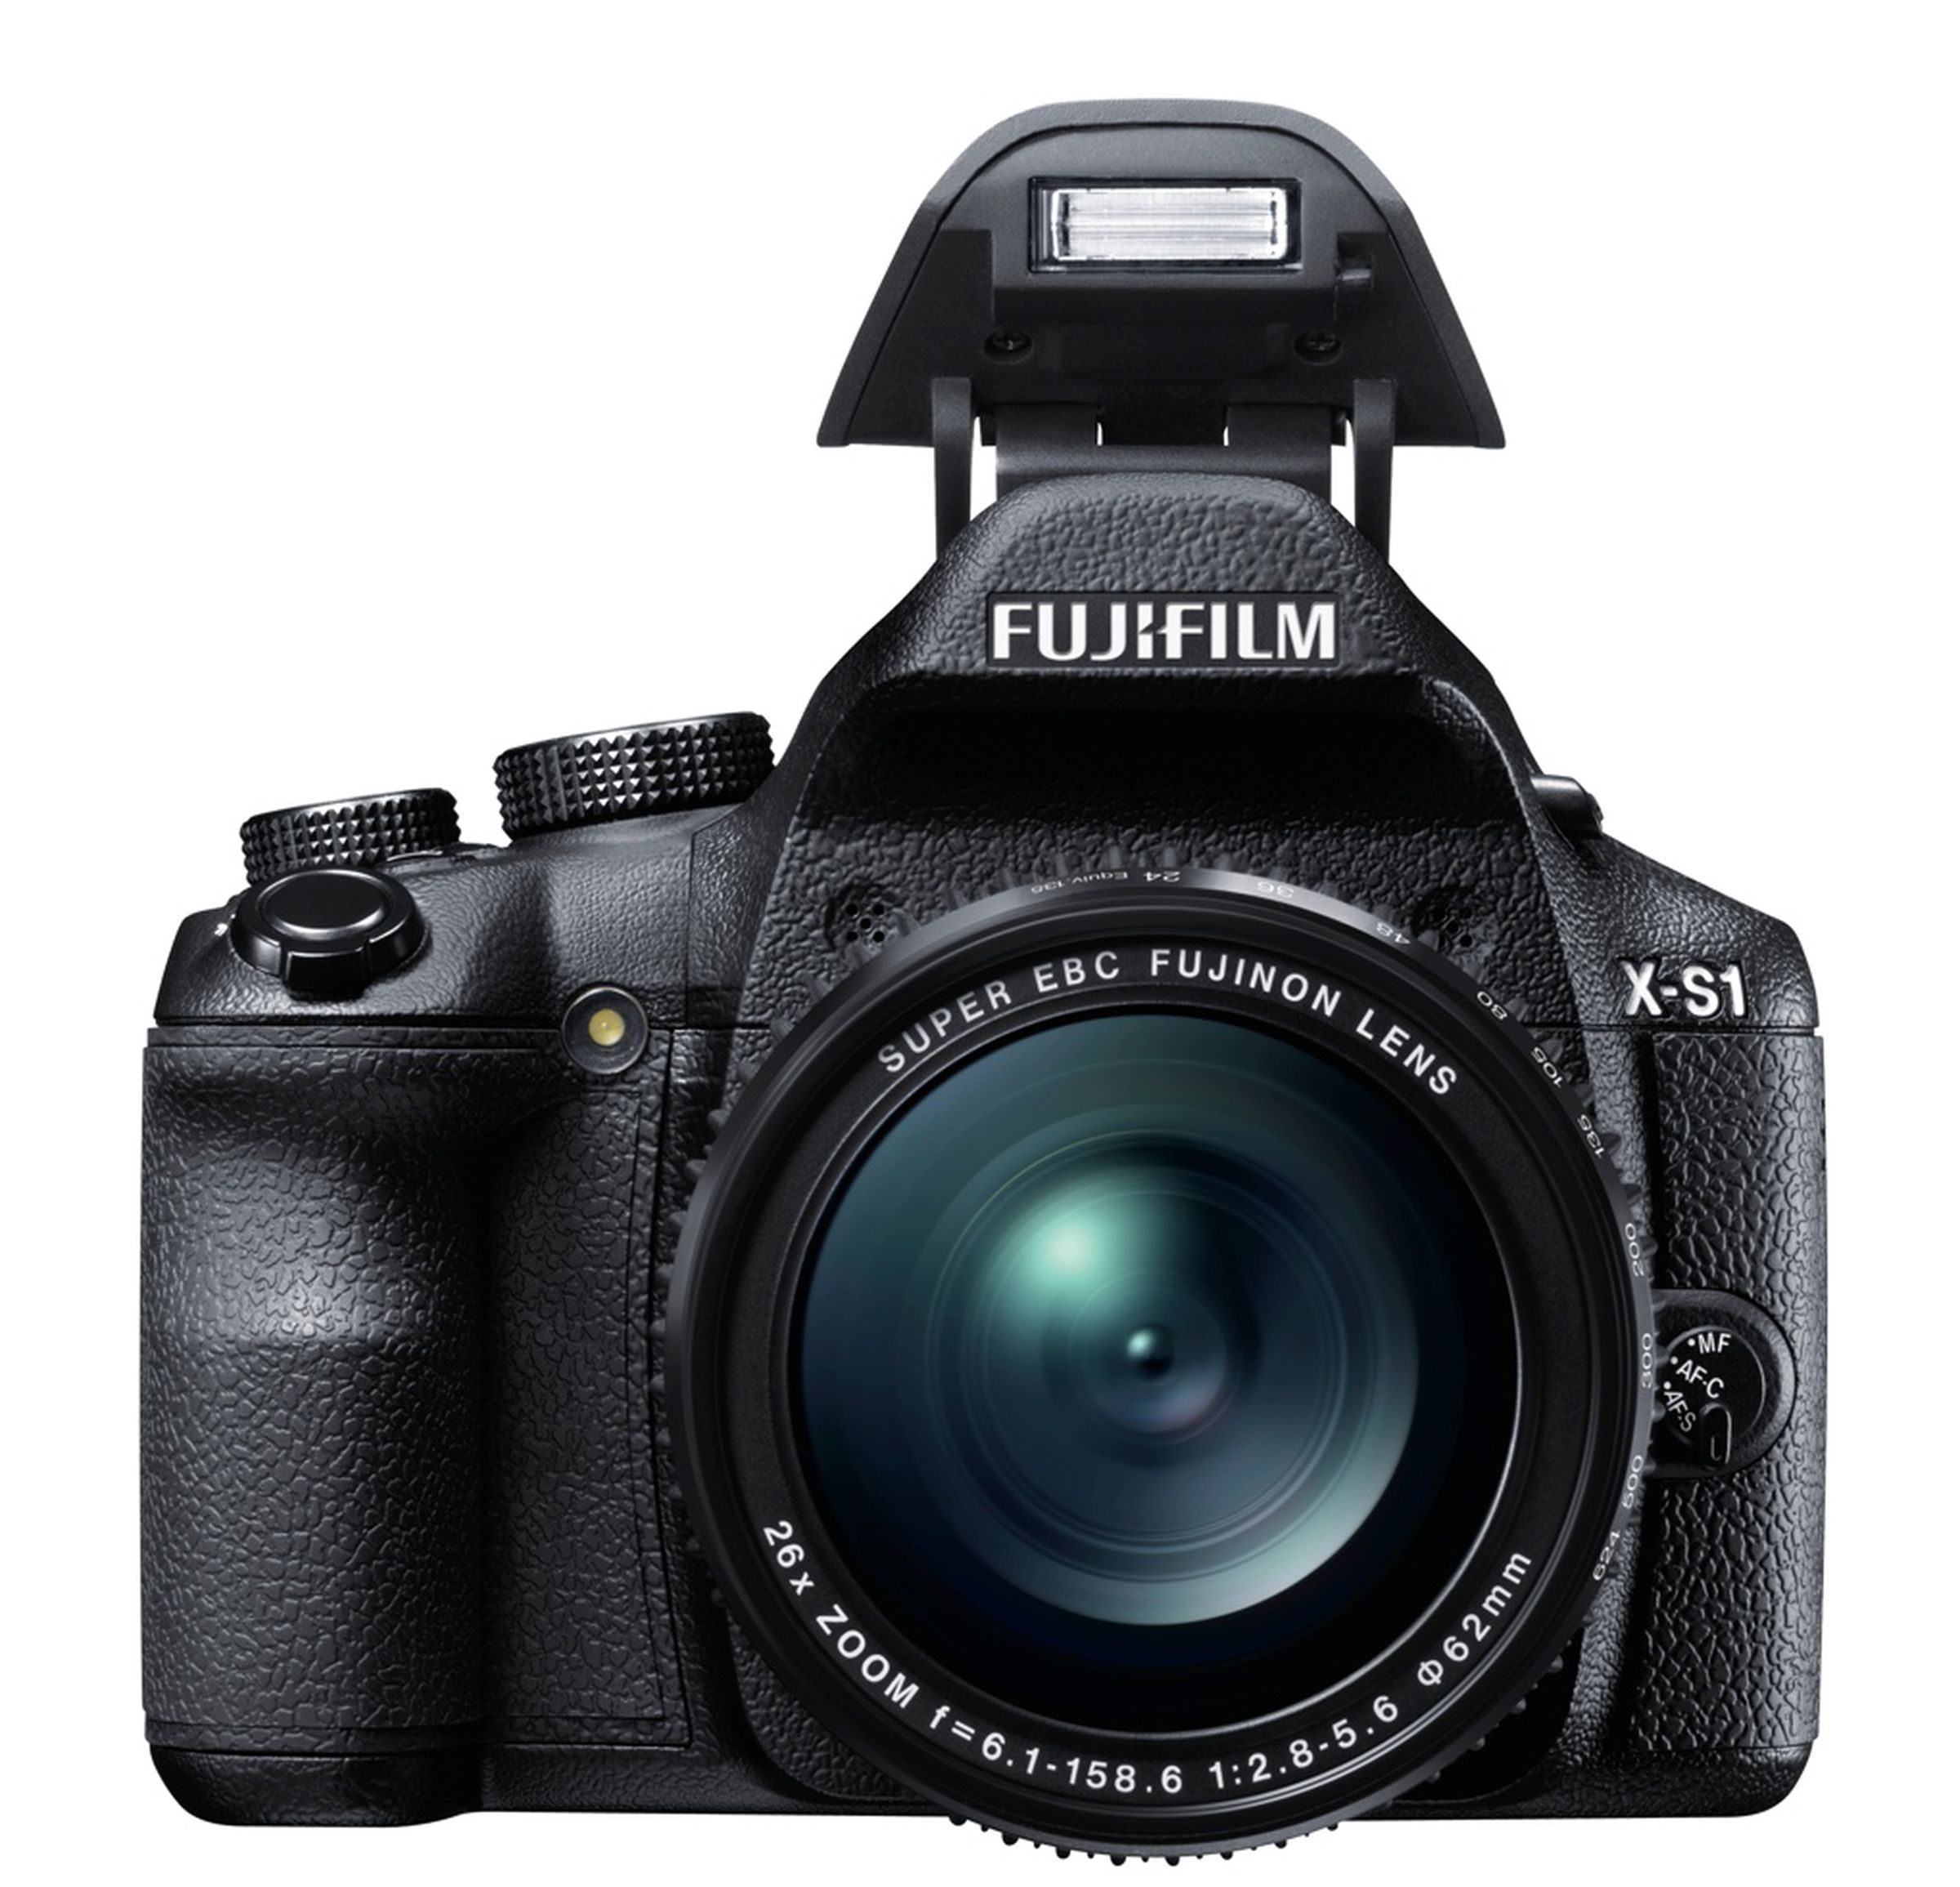 Fujifilm X-S1 press gallery